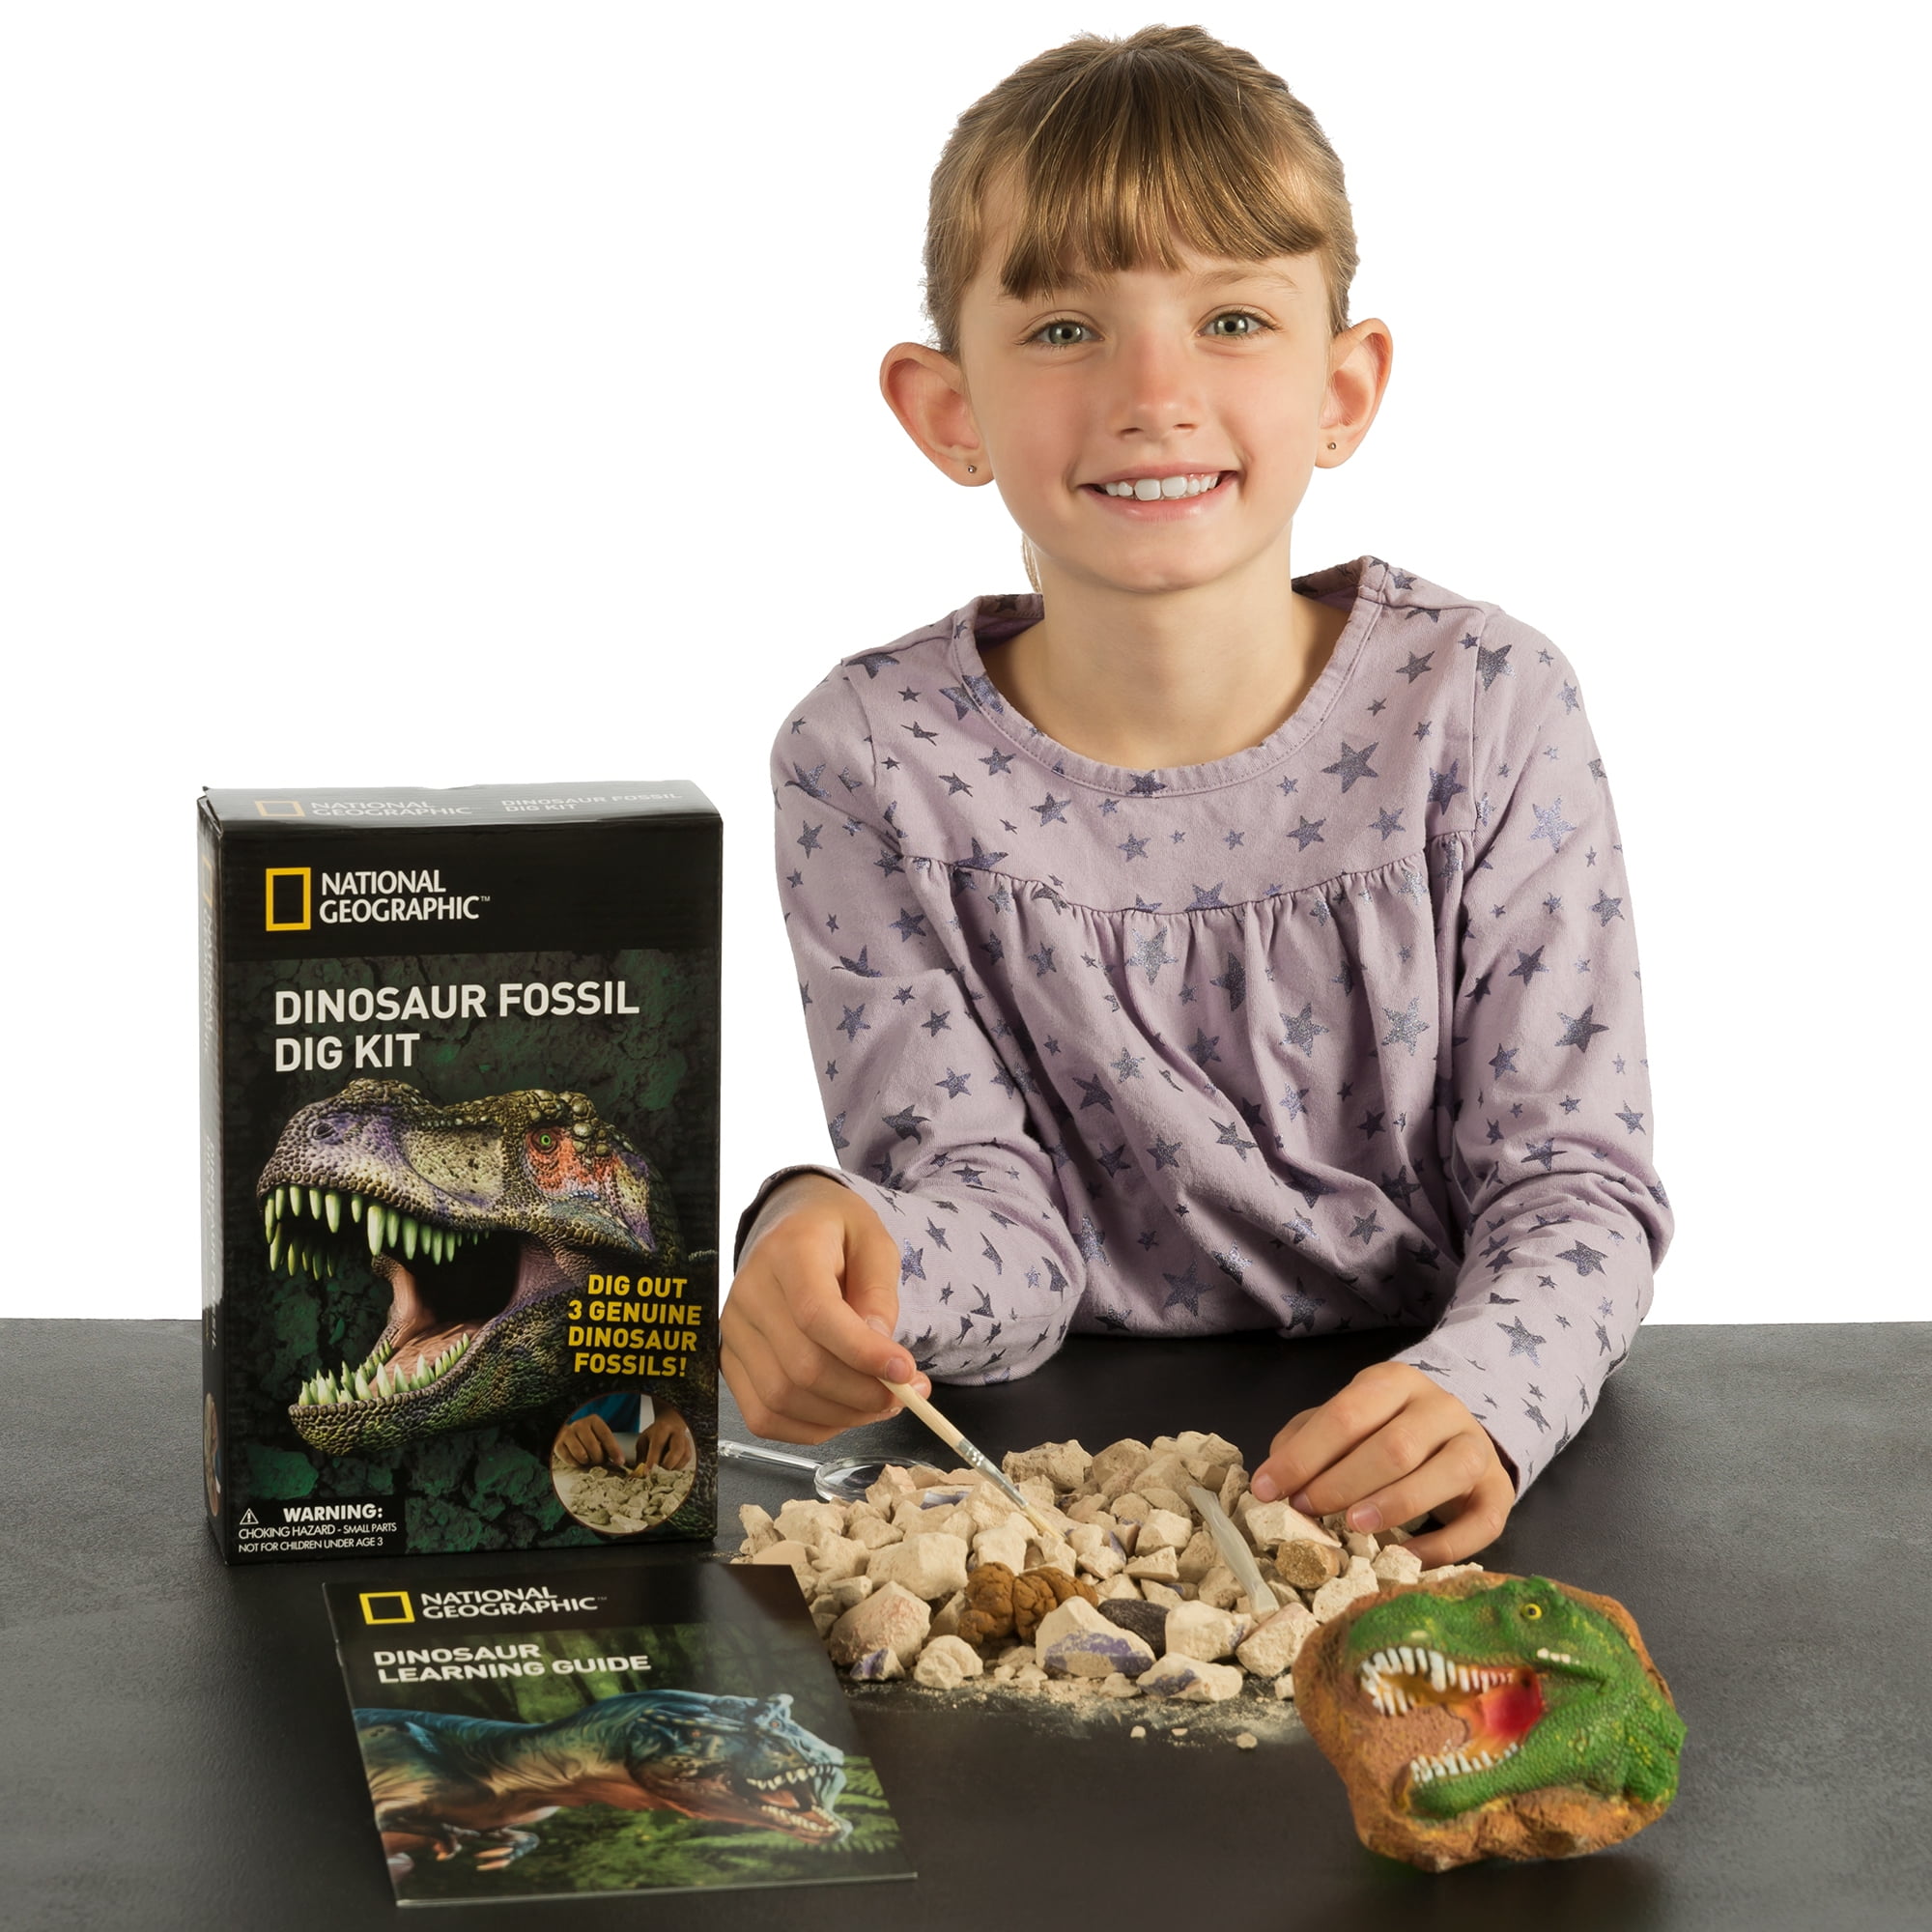 Educational LOT OF 2 GEMSTONE & DINOSAUR Dig Kit Kids Science Toys E3 Crystals 